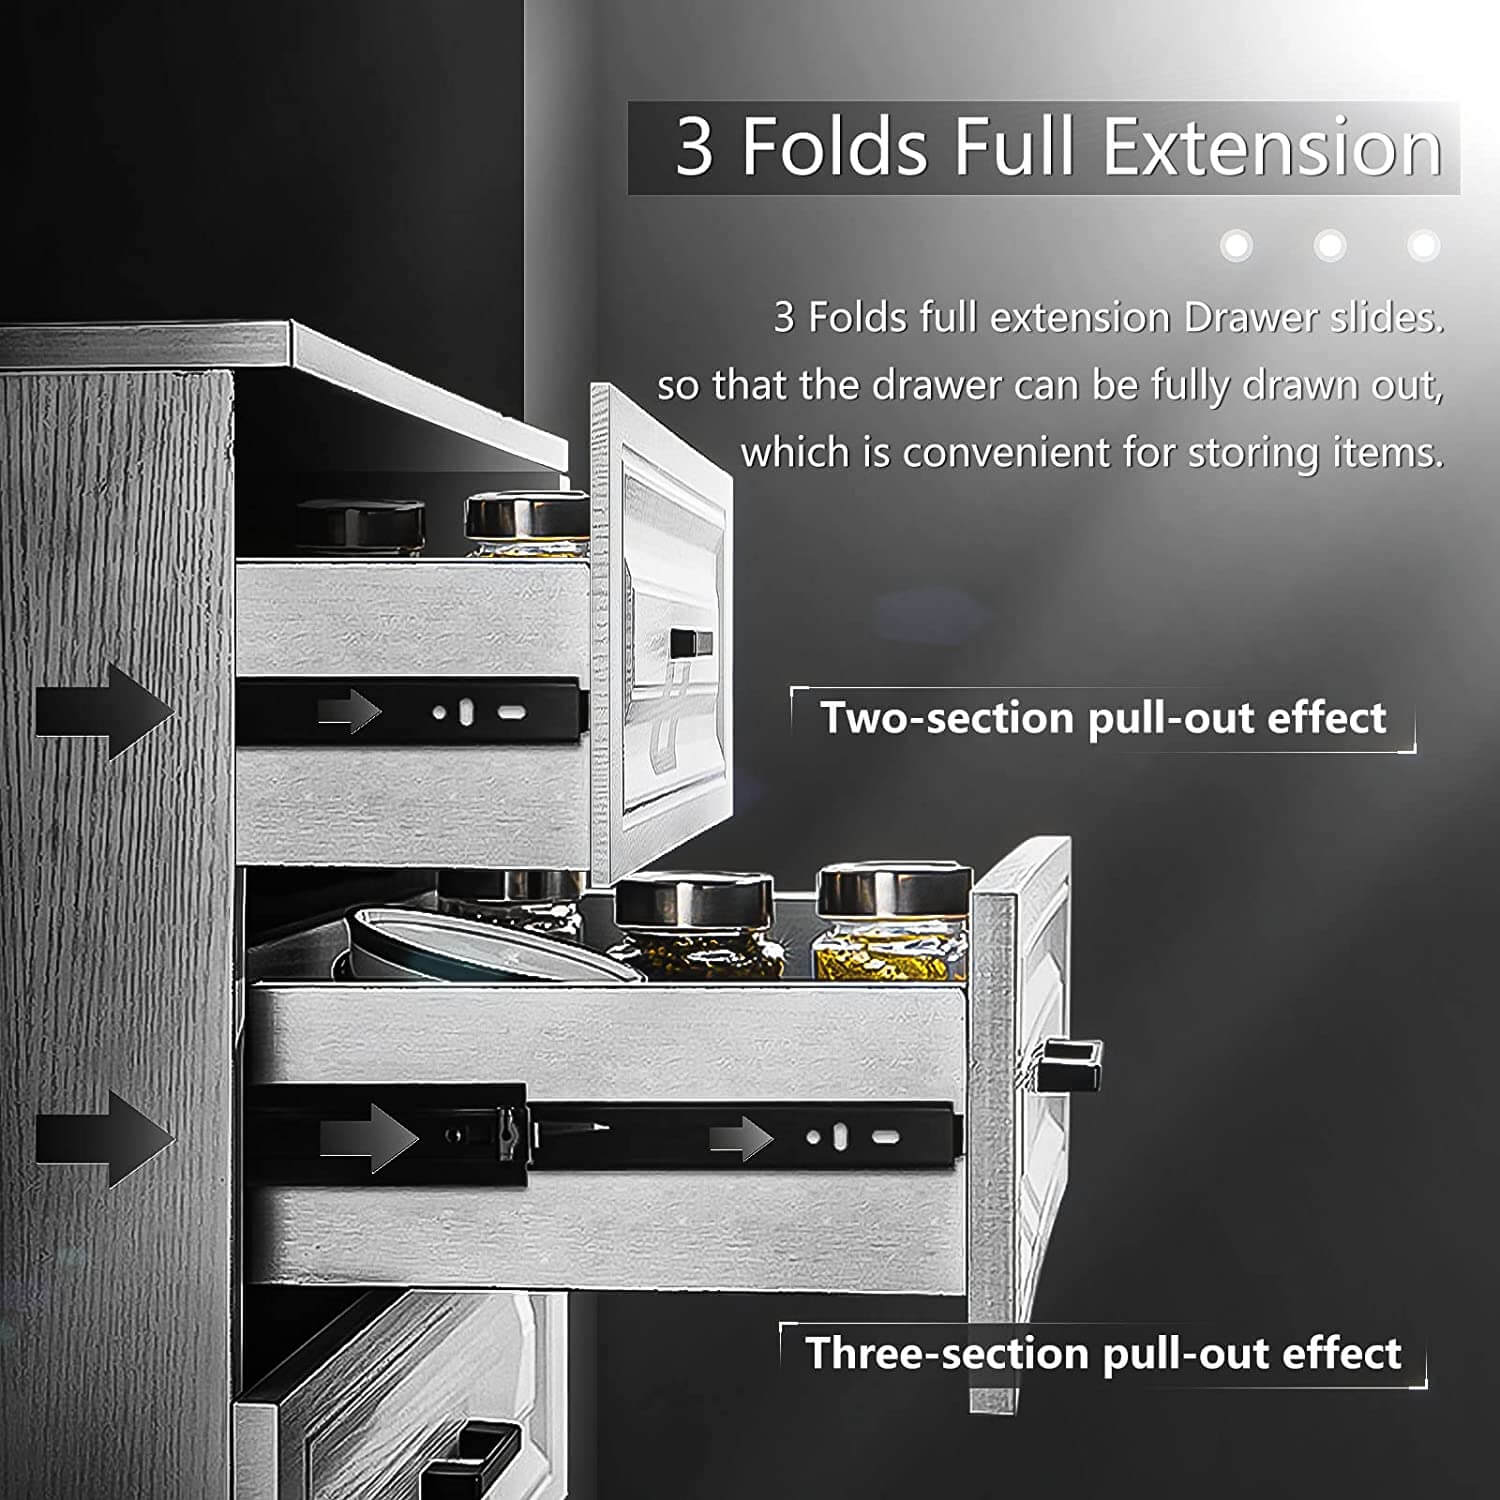 10 pair 5 pair Full Extension Drawer Slides Rails 100 LB Load Capacity Side Mount Ball Bearing File Cabinet Trash Can Slider